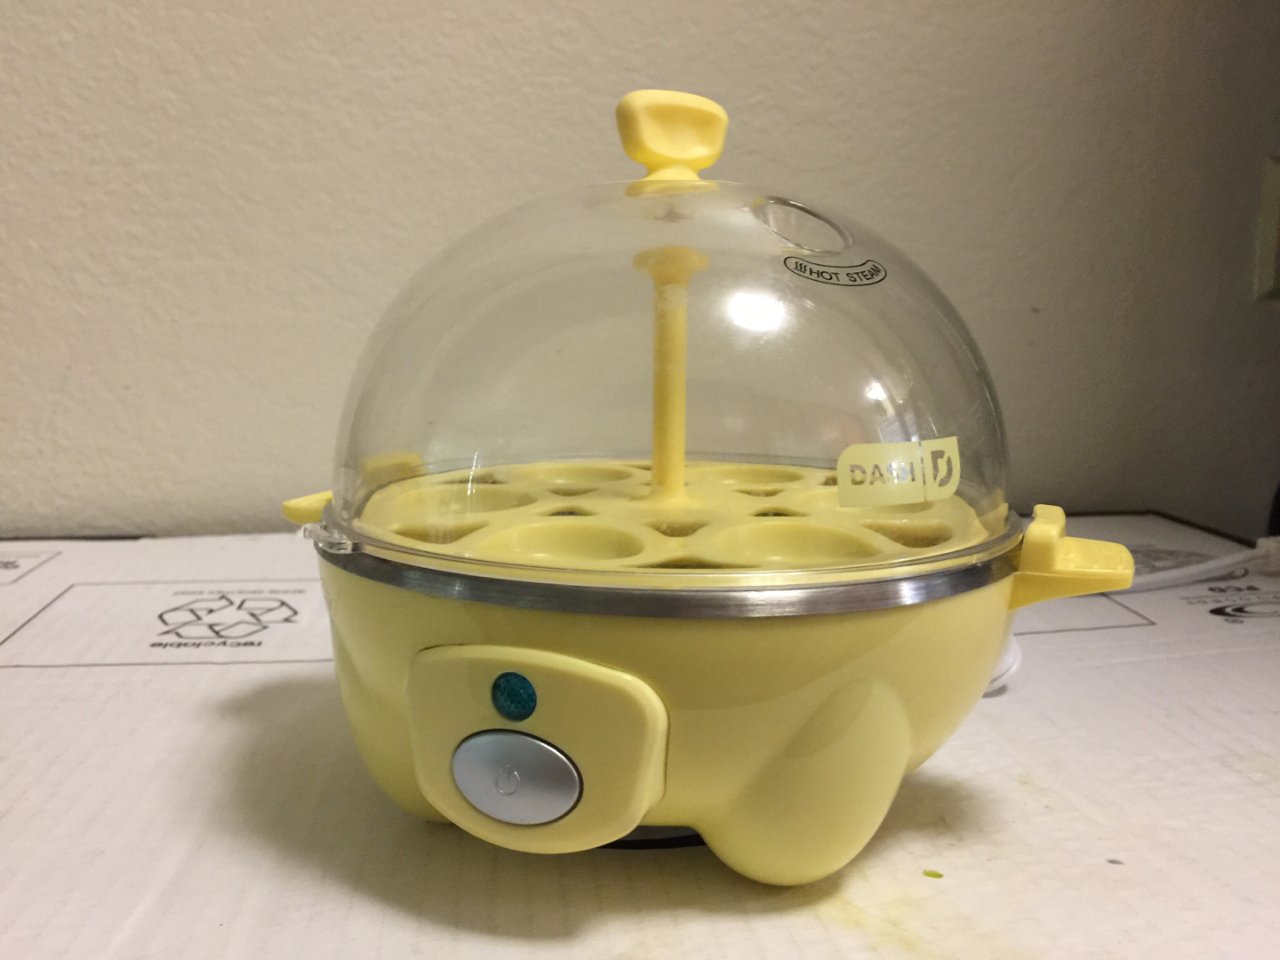 Dash Rapid egg cooker